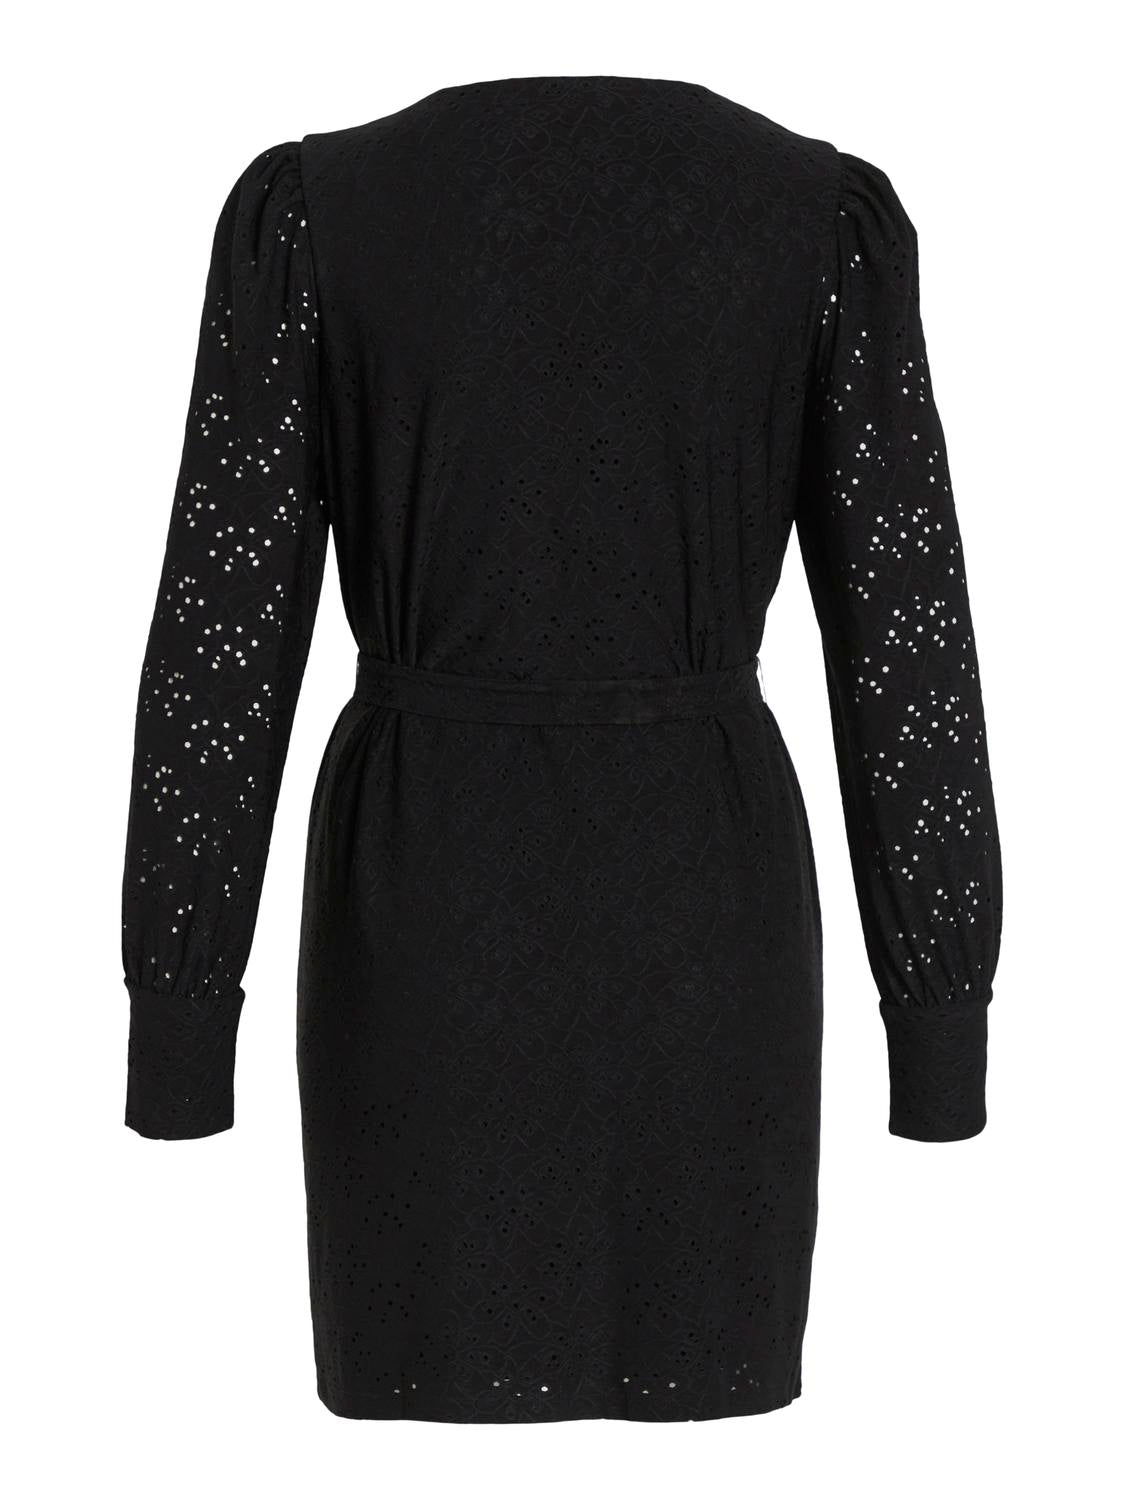 VIPAULINA Dress - Black